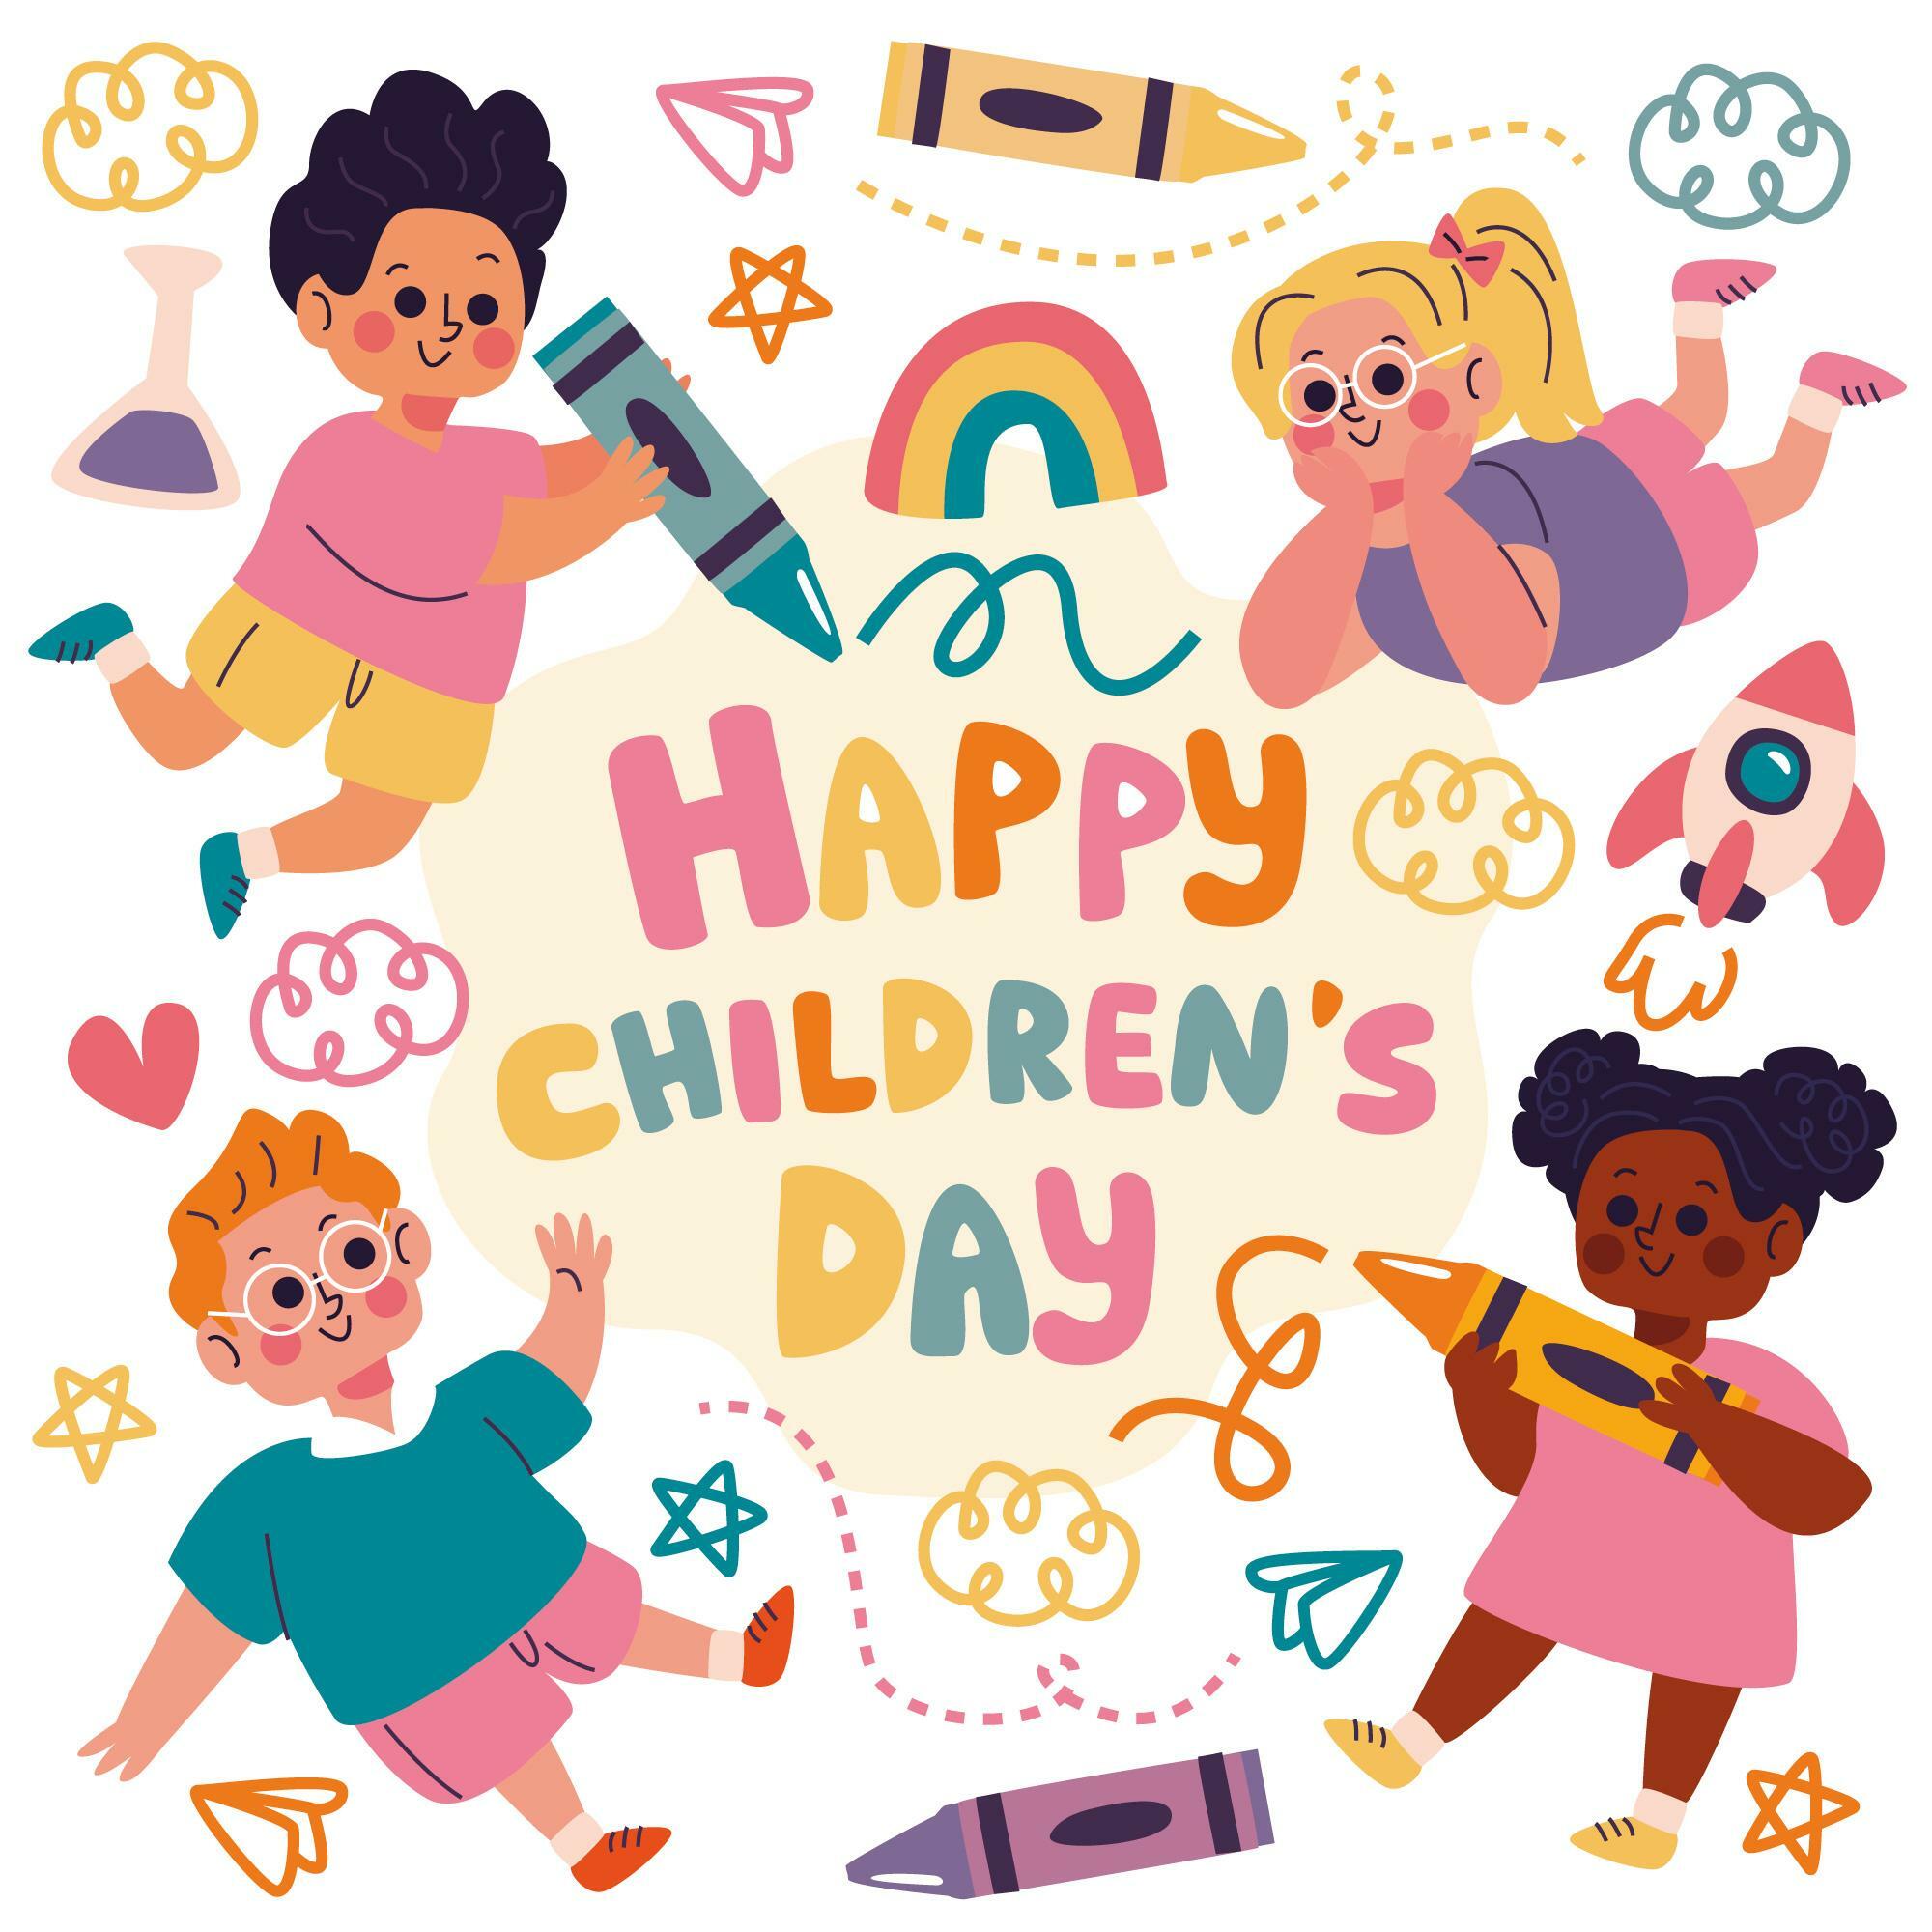 Happy Children’s Day - Original image